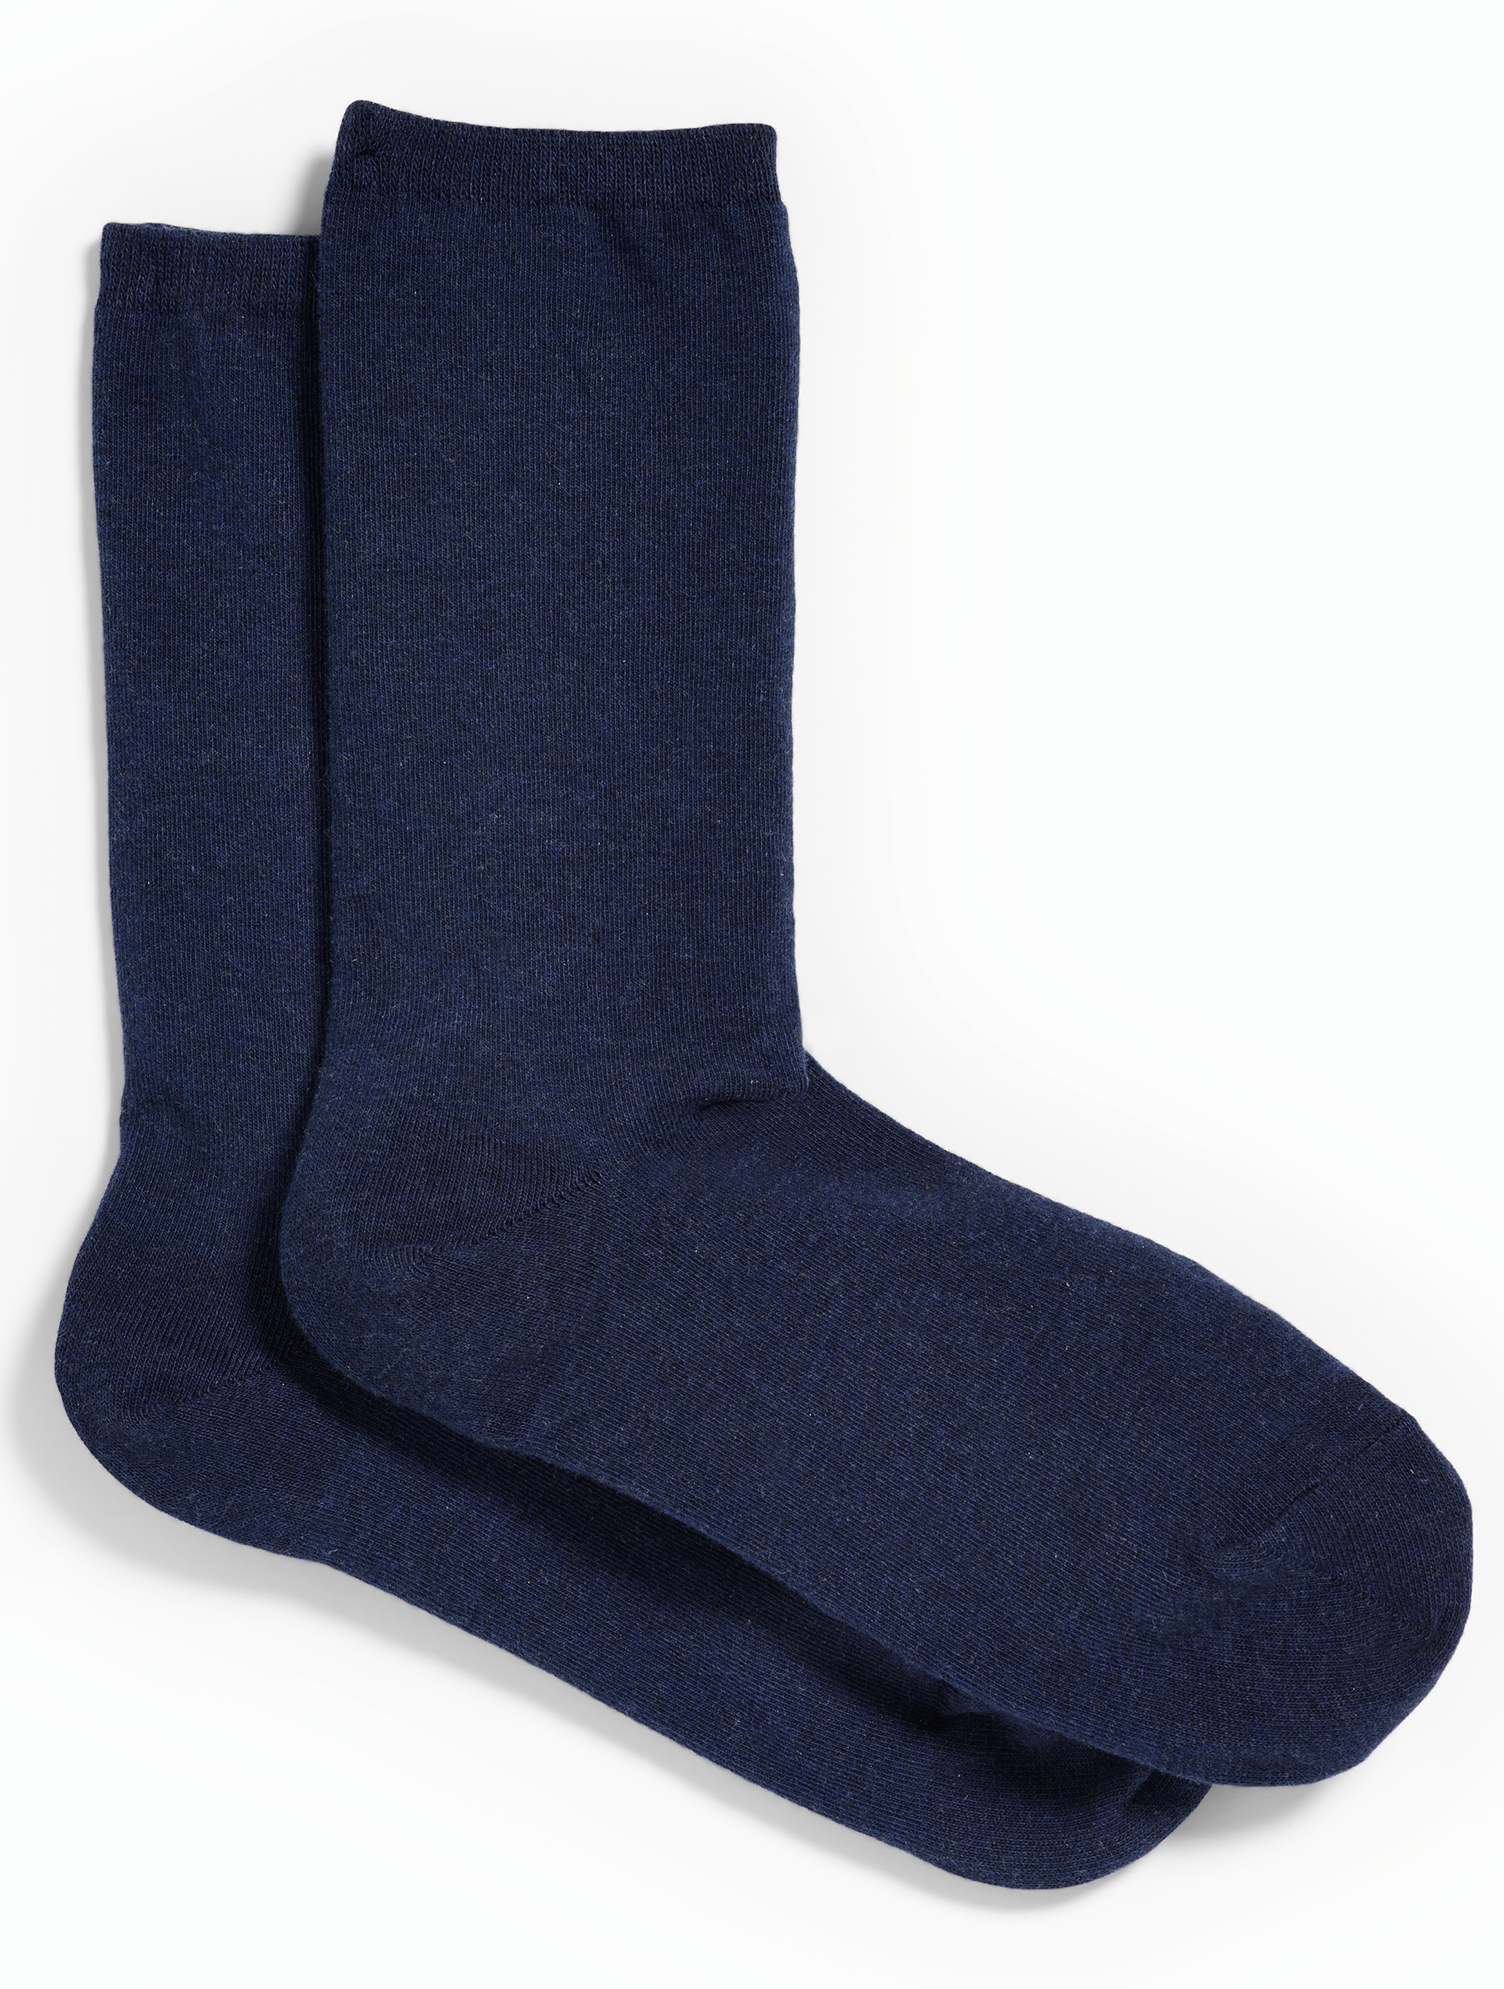 Talbots Melange Trouser Socks - Indigo Heather - 001